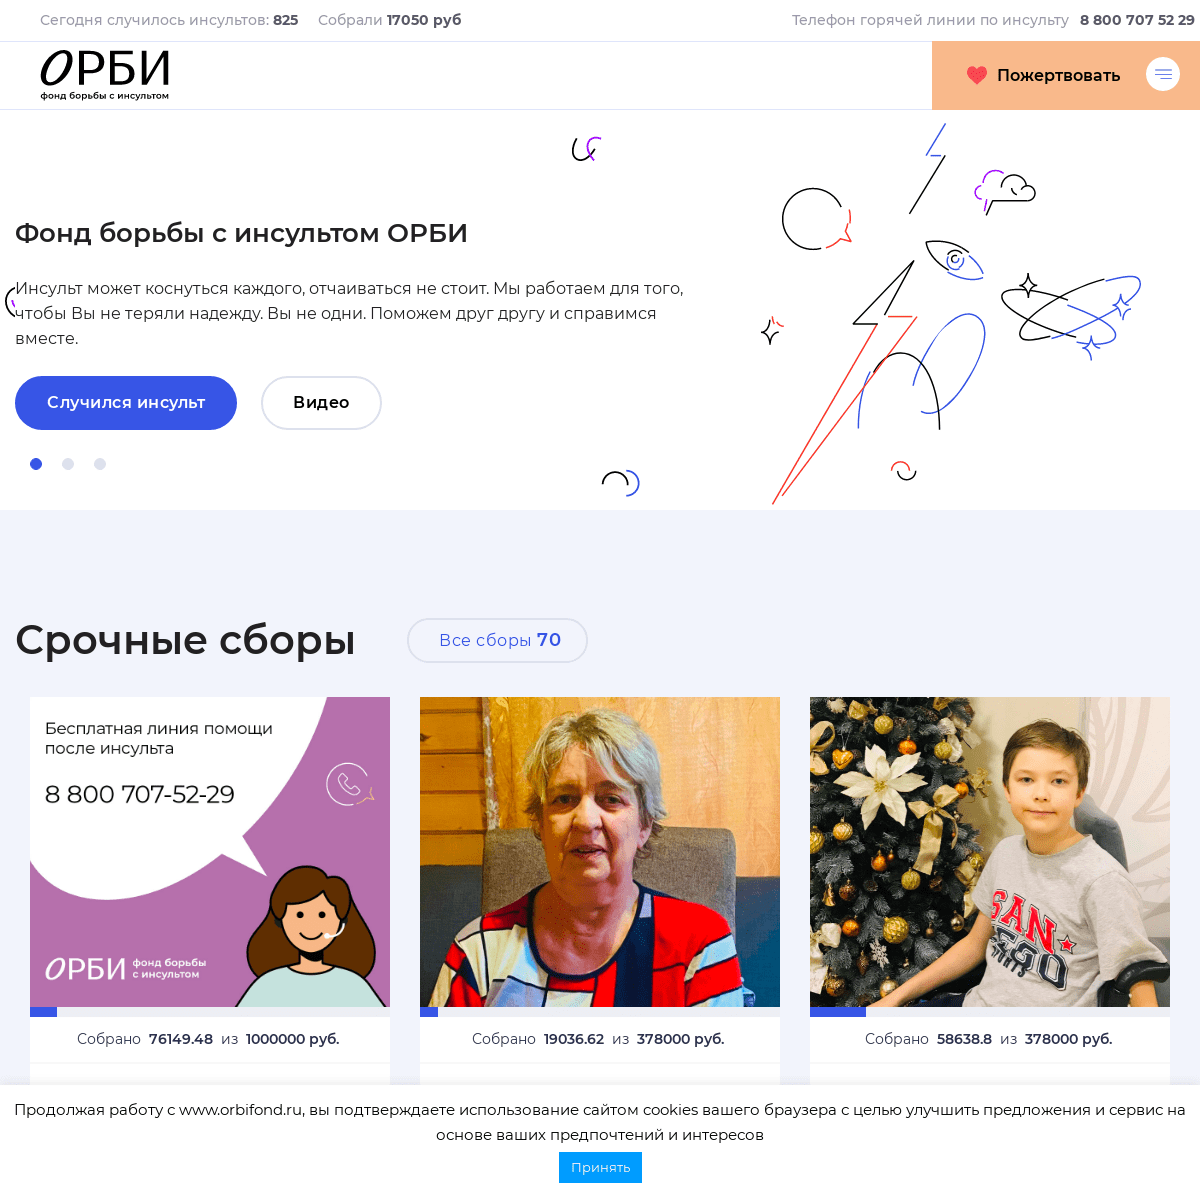 A complete backup of https://orbifond.ru